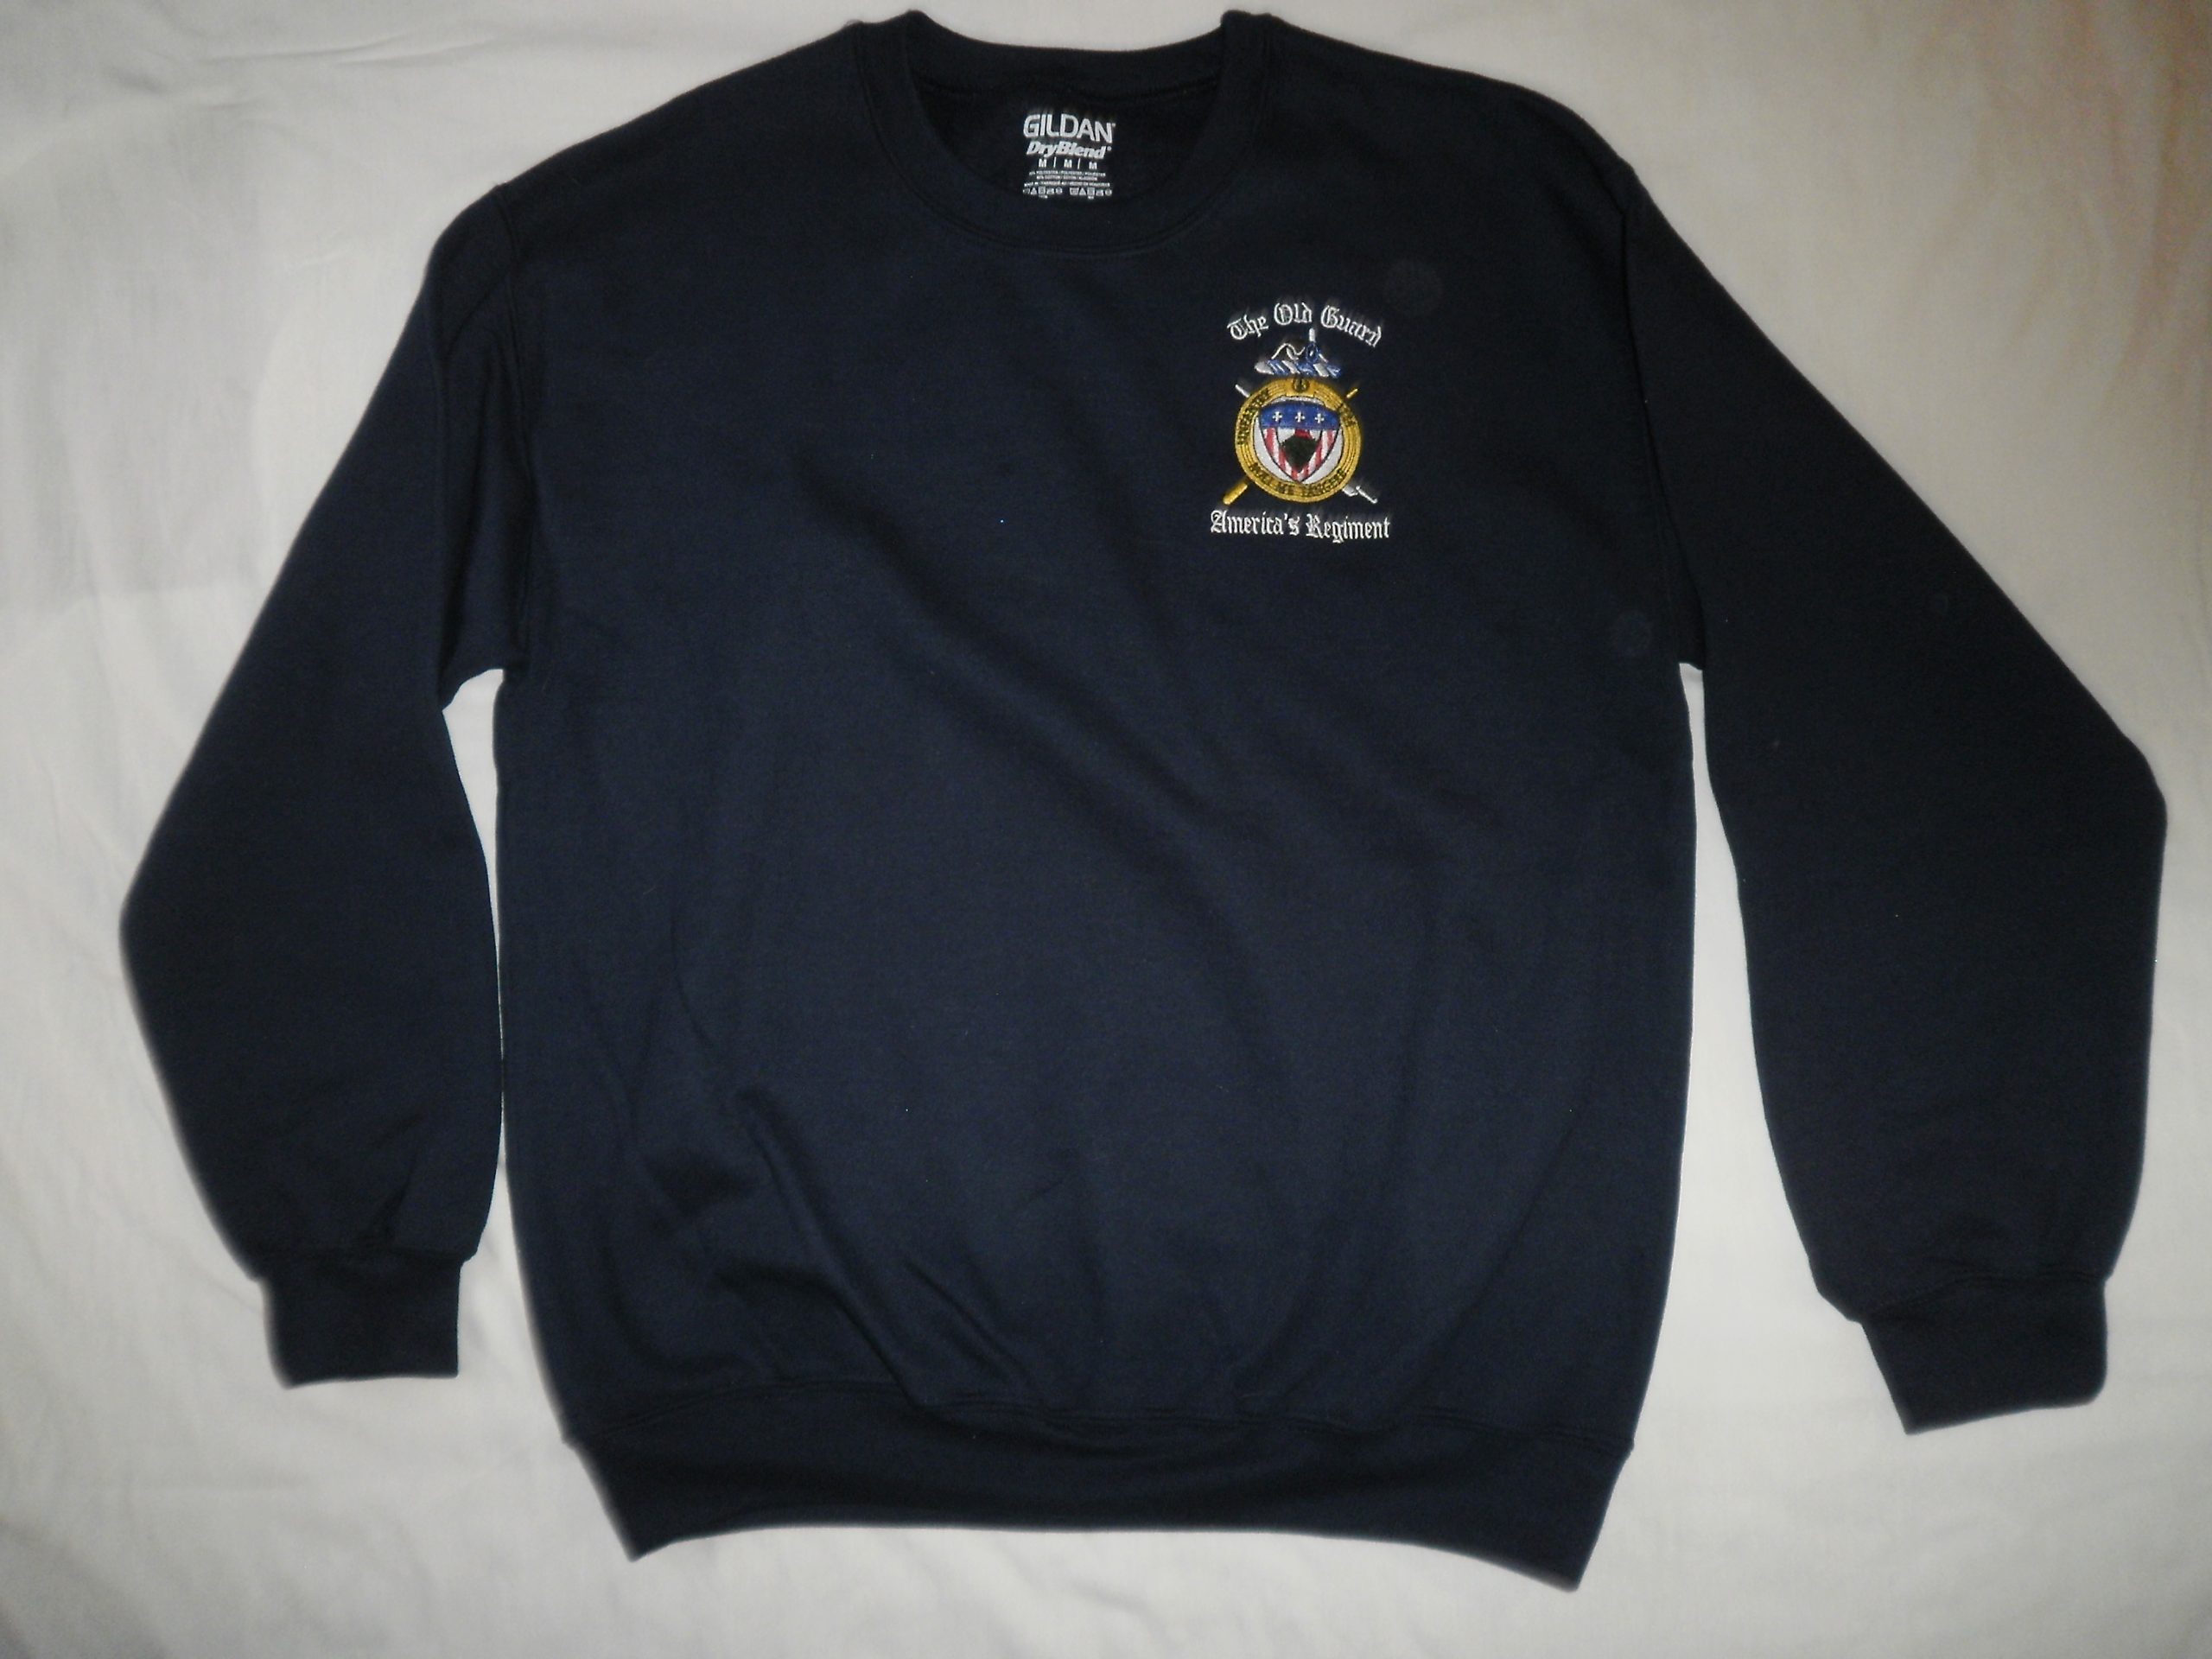 Sweatshirt, America's Regiment - The Old Guard Association!